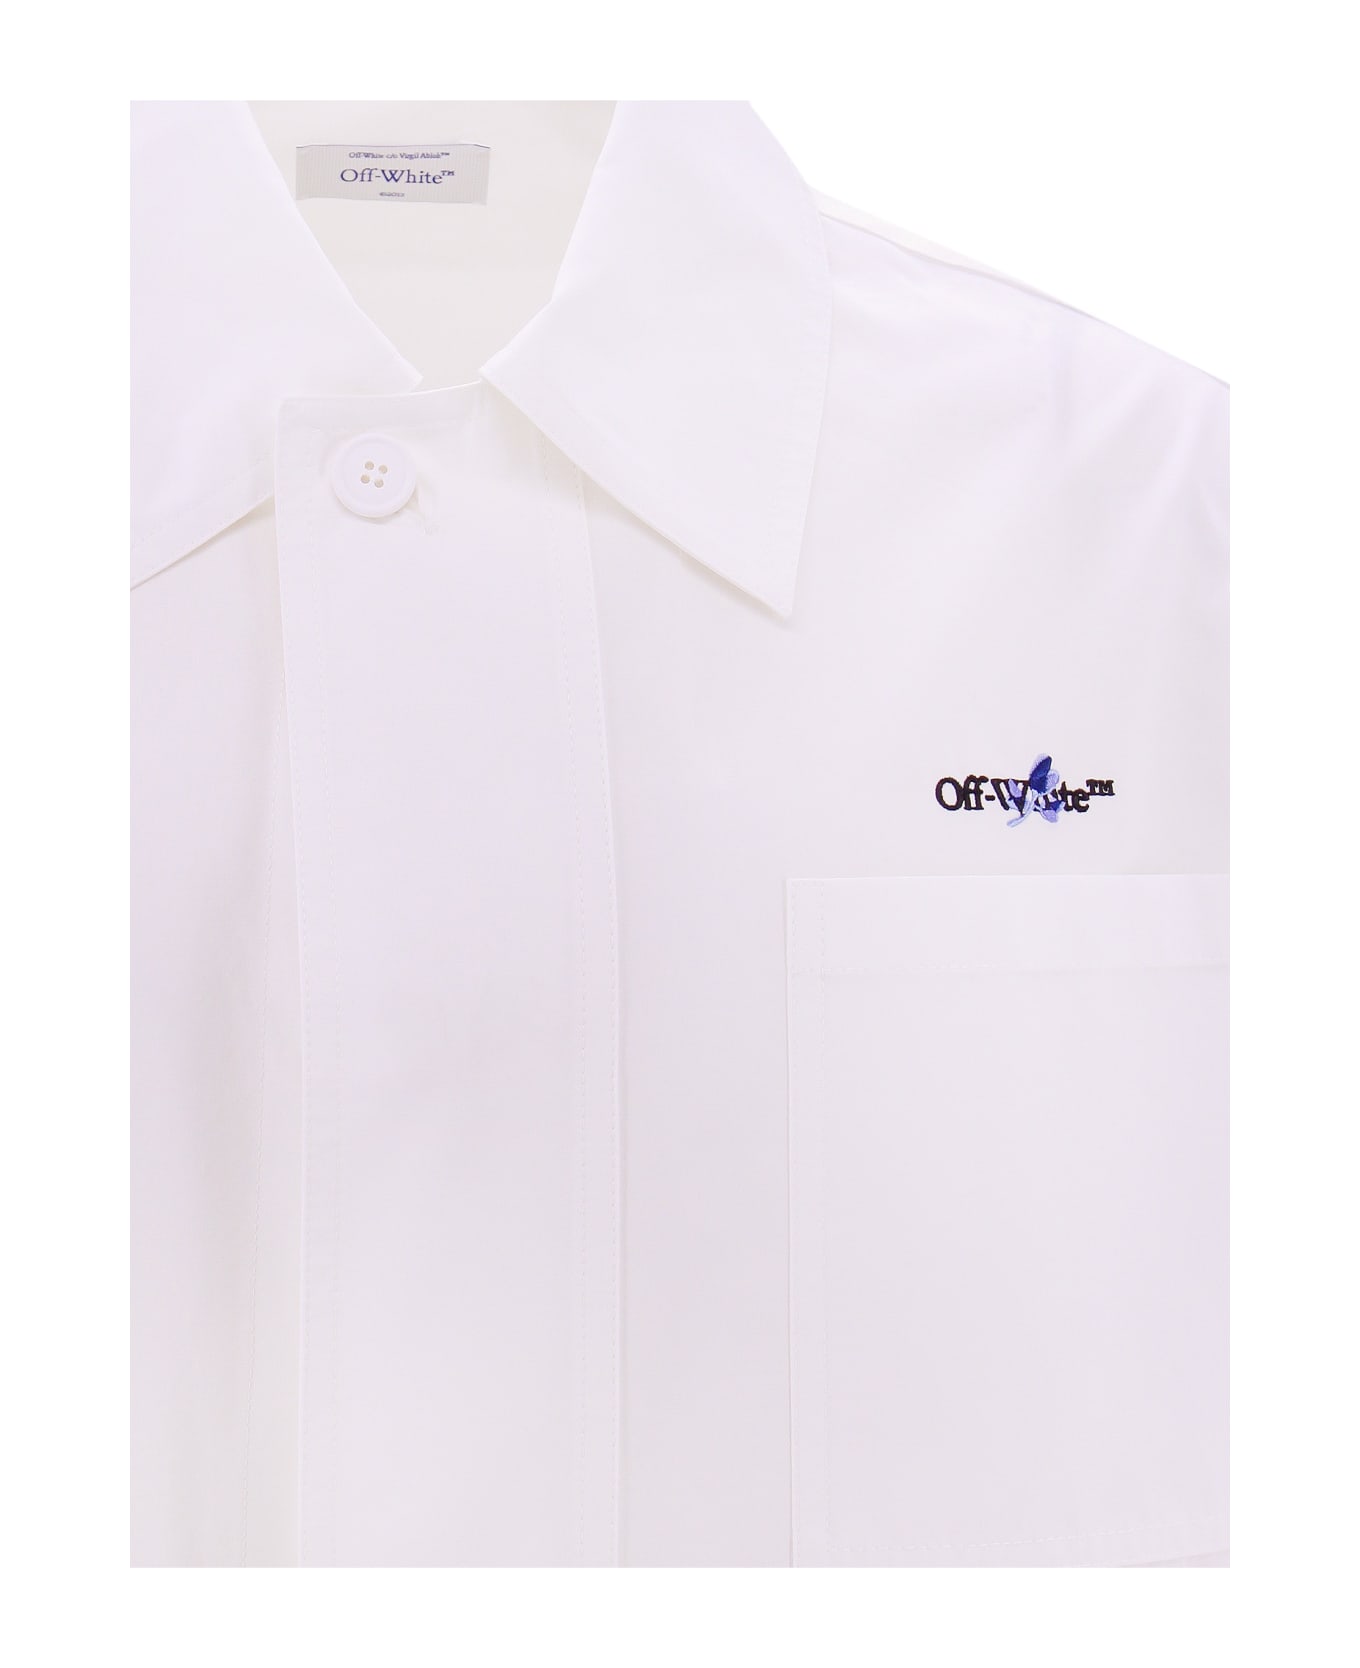 Off-White Oversize Shirt - White